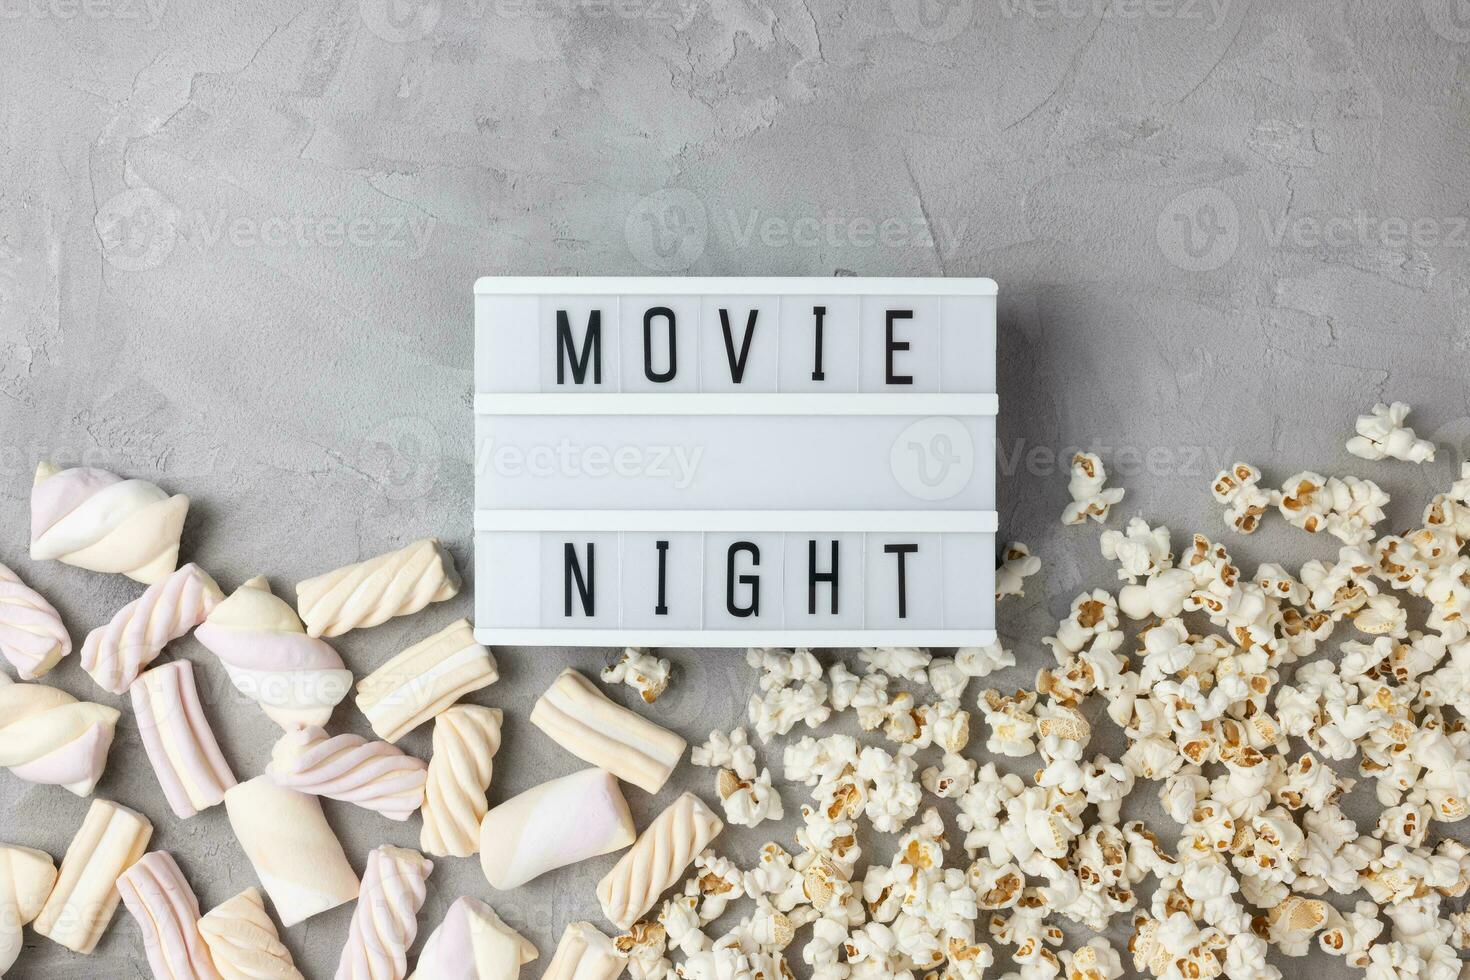 tekst film nacht met popcorn en heemst. film snacks foto